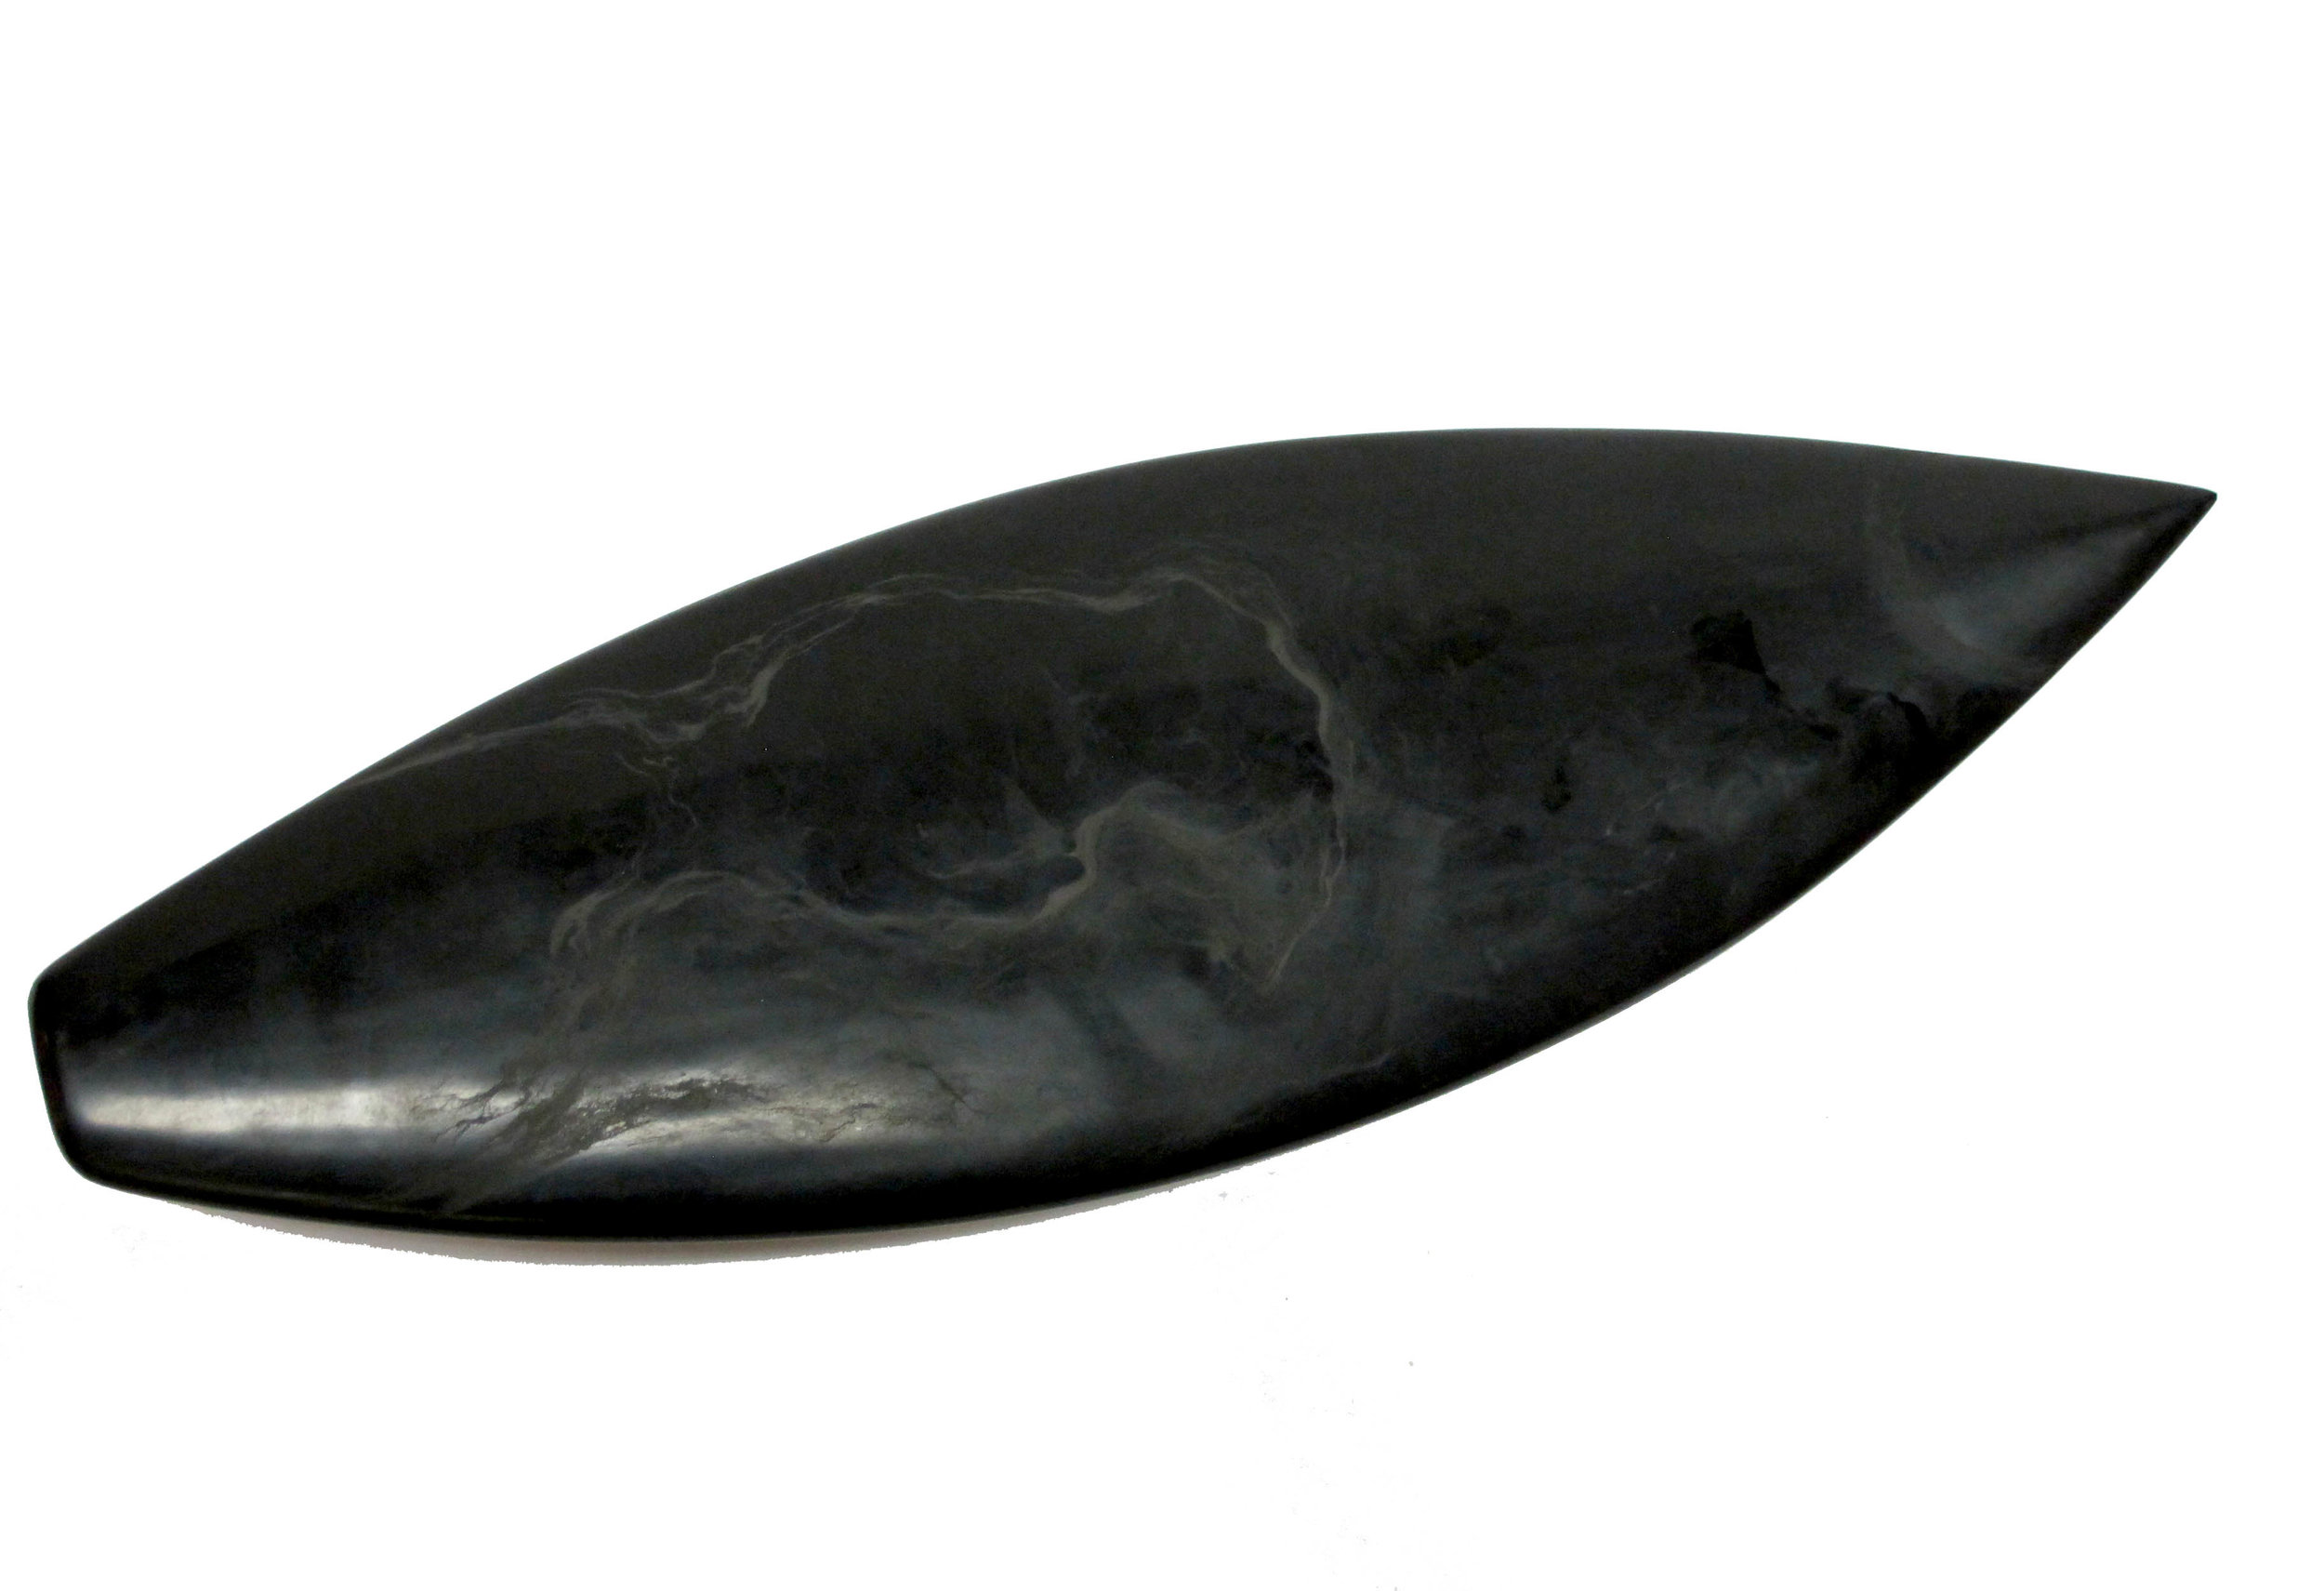 KL_Surfboard Small_black marble.jpg